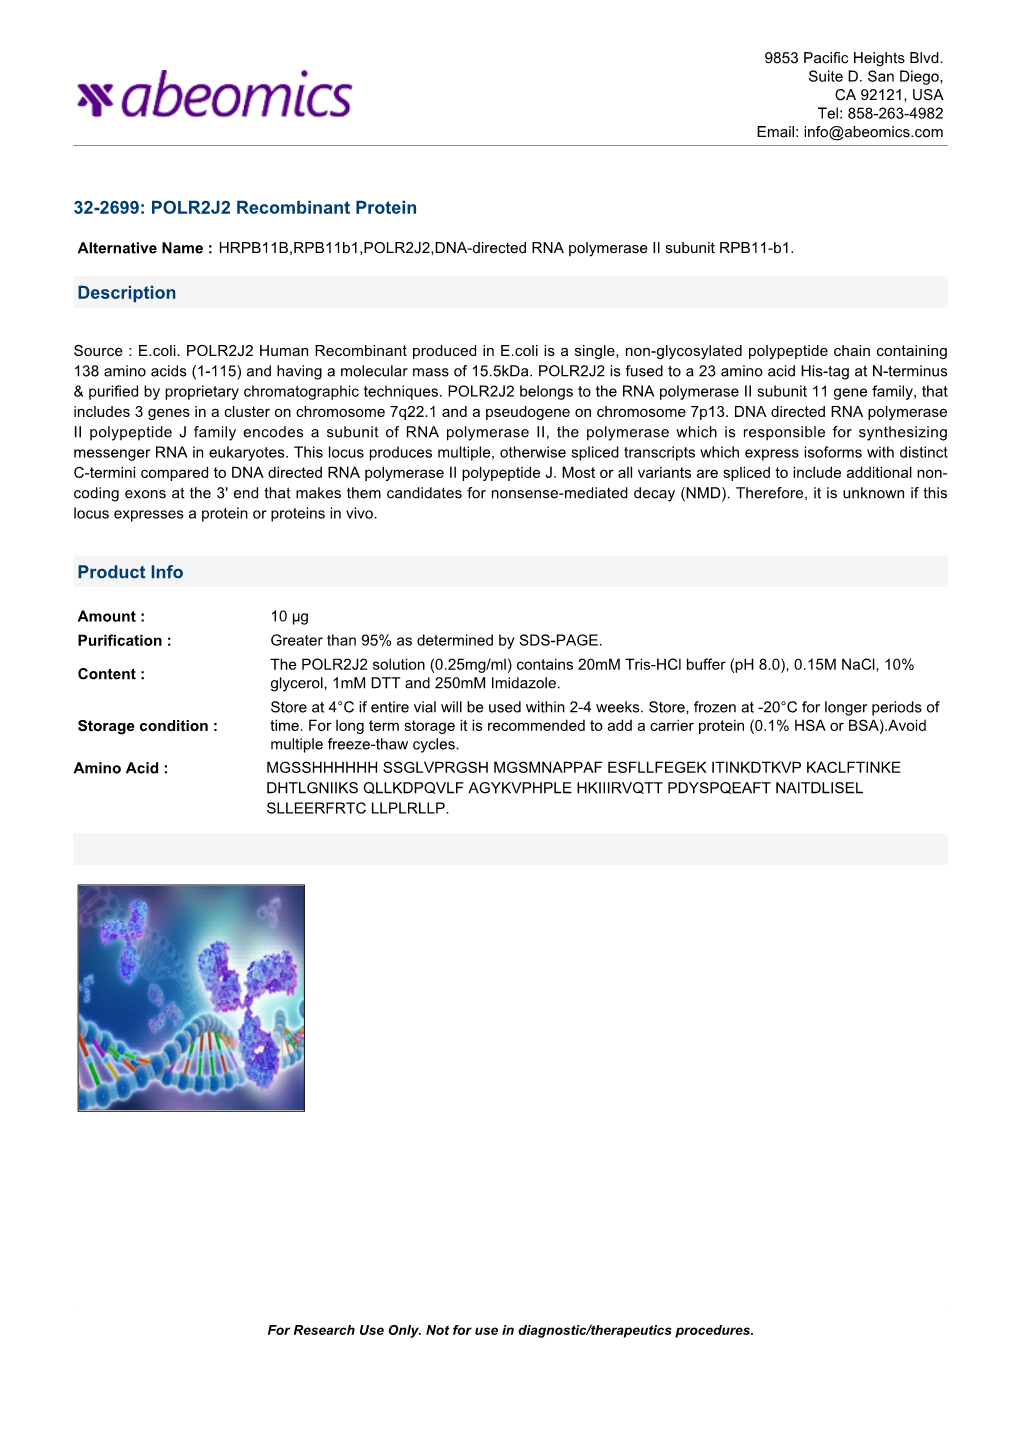 POLR2J2 Recombinant Protein Description Product Info